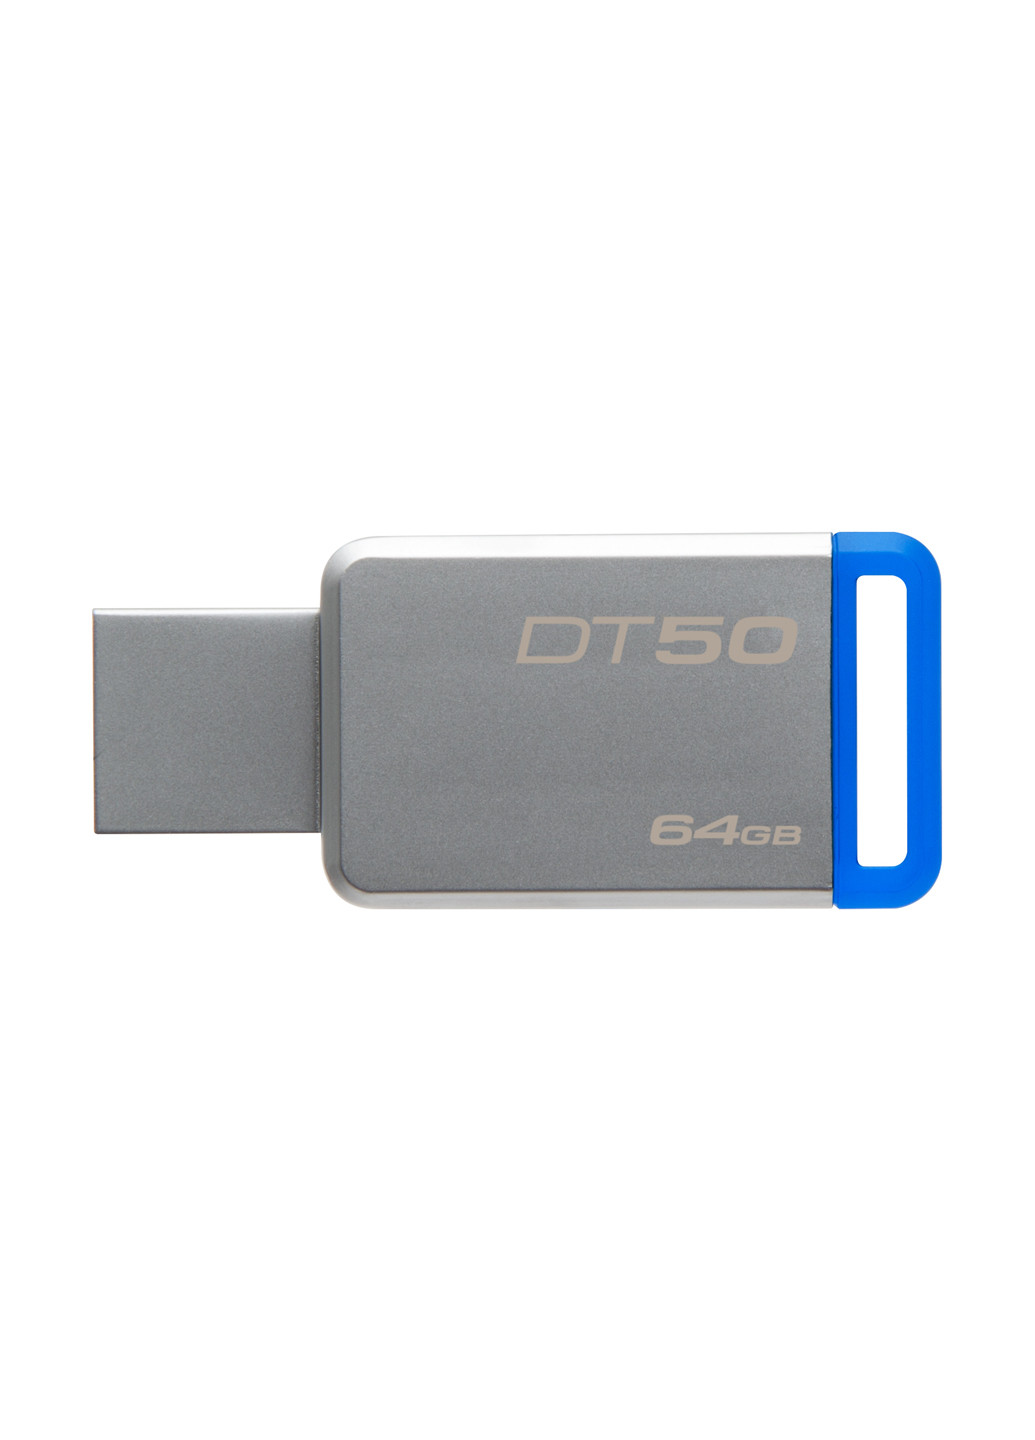 Флеш пам'ять USB DataTraveler 50 64GB Blue (DT50 / 64GB) Kingston флеш память usb kingston datatraveler 50 64gb blue (dt50/64gb) (134201722)